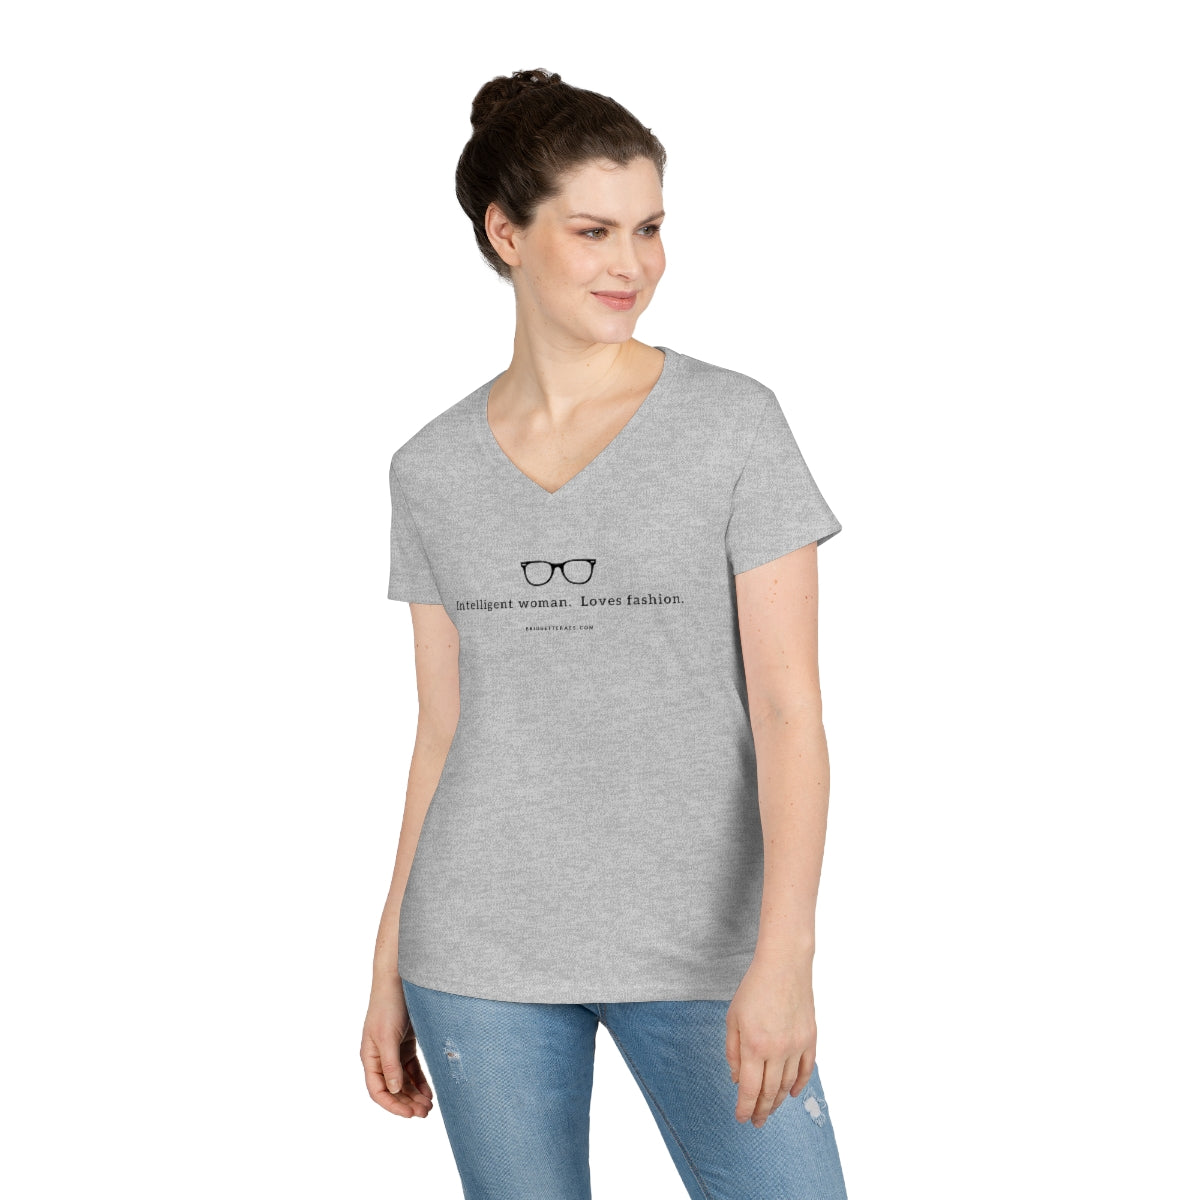 Intelligent Woman. Loves Fashion. 100% Cotton V-Neck T-Shirt